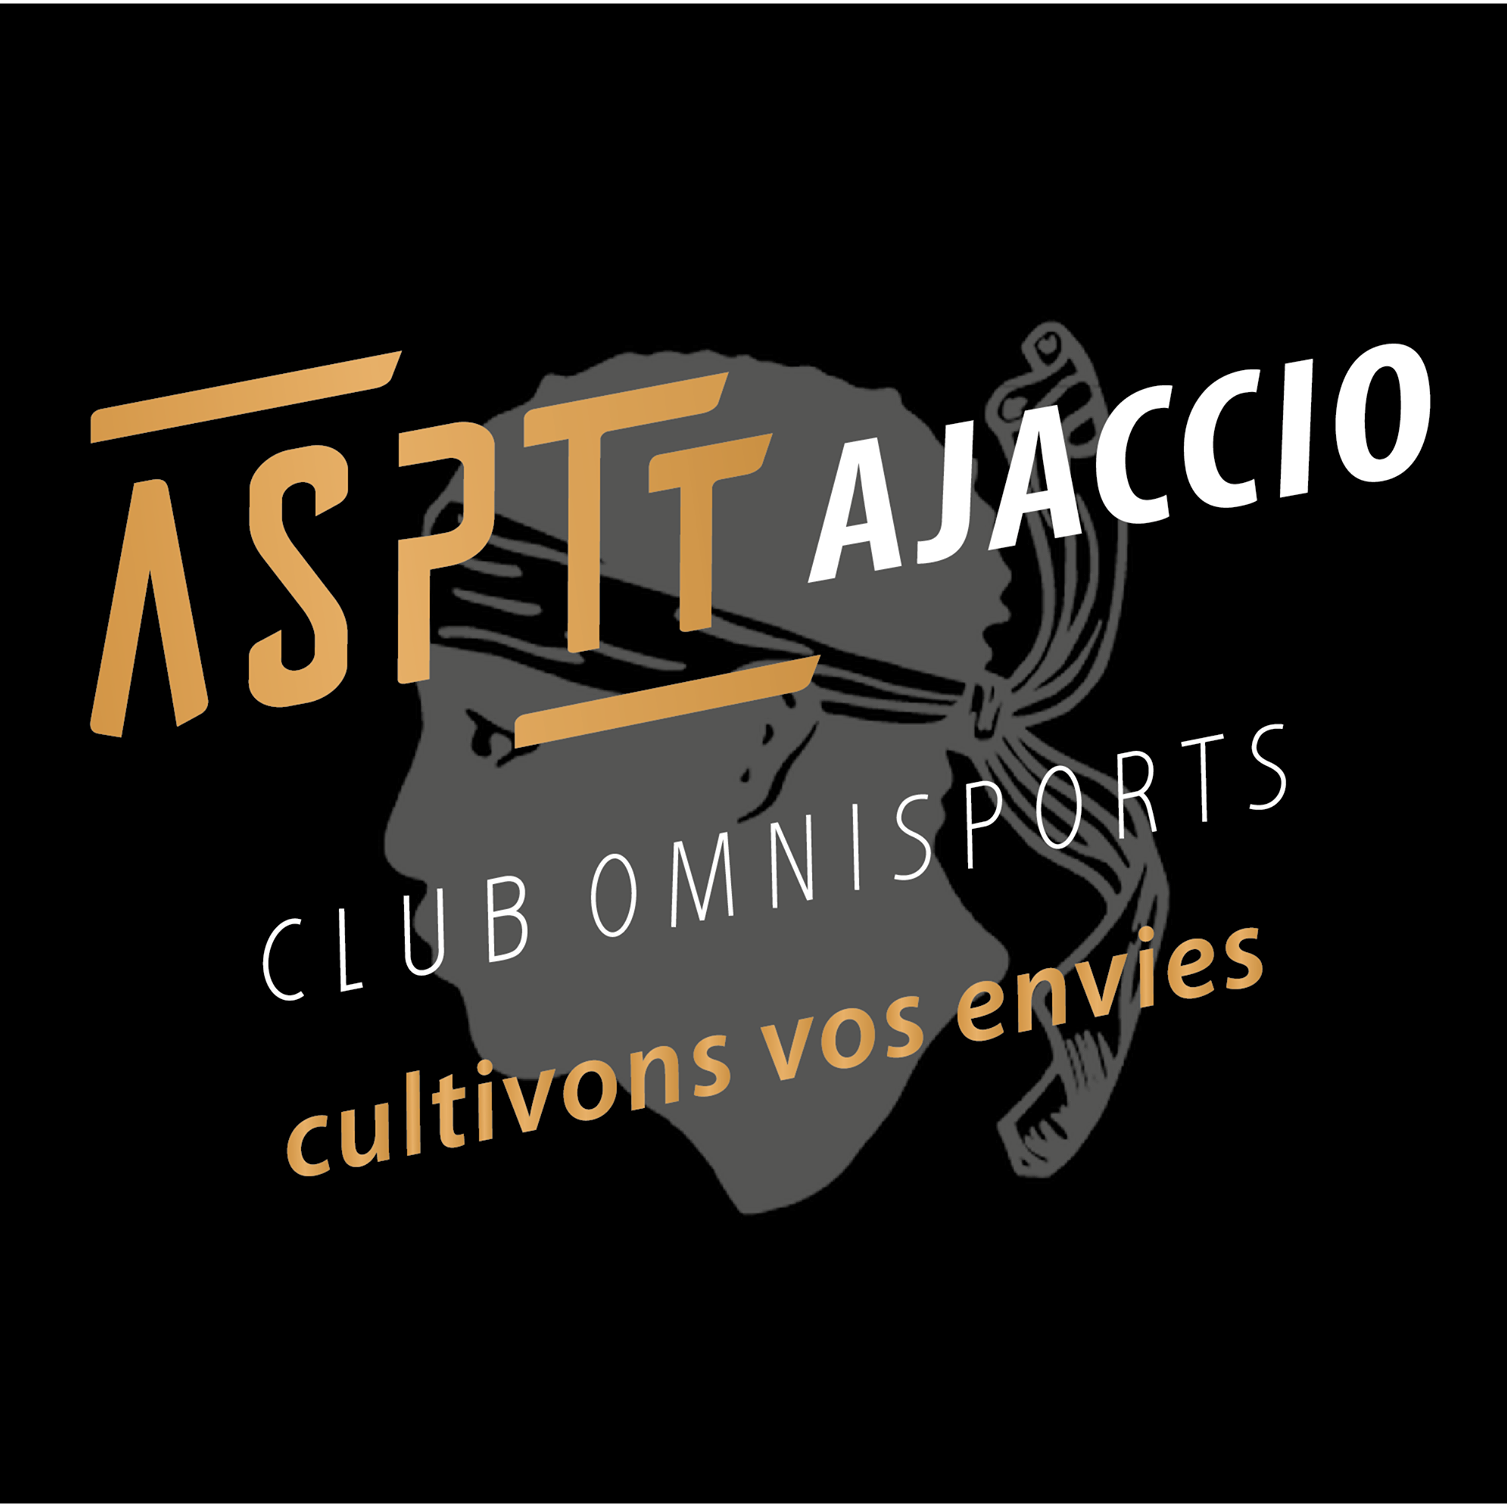 Asptt Ajaccio Association Sportive Omni